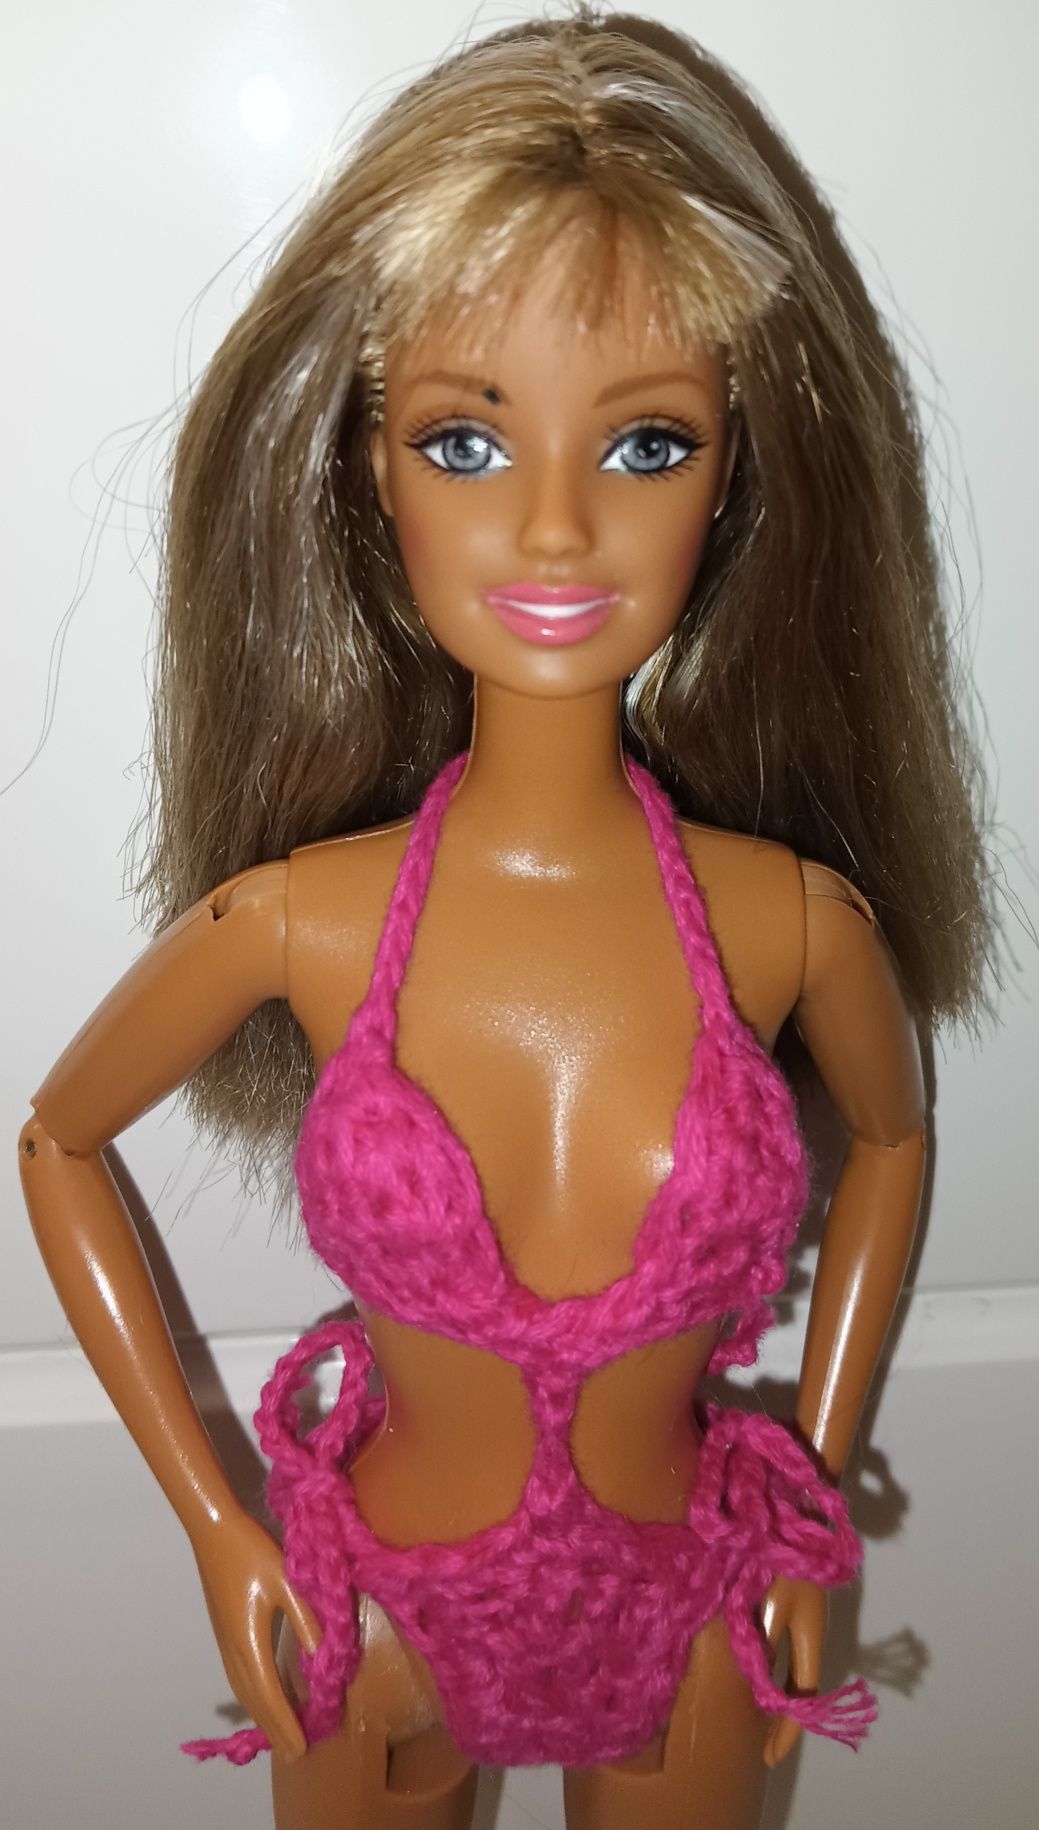 Lalka Barbie California artykułowana